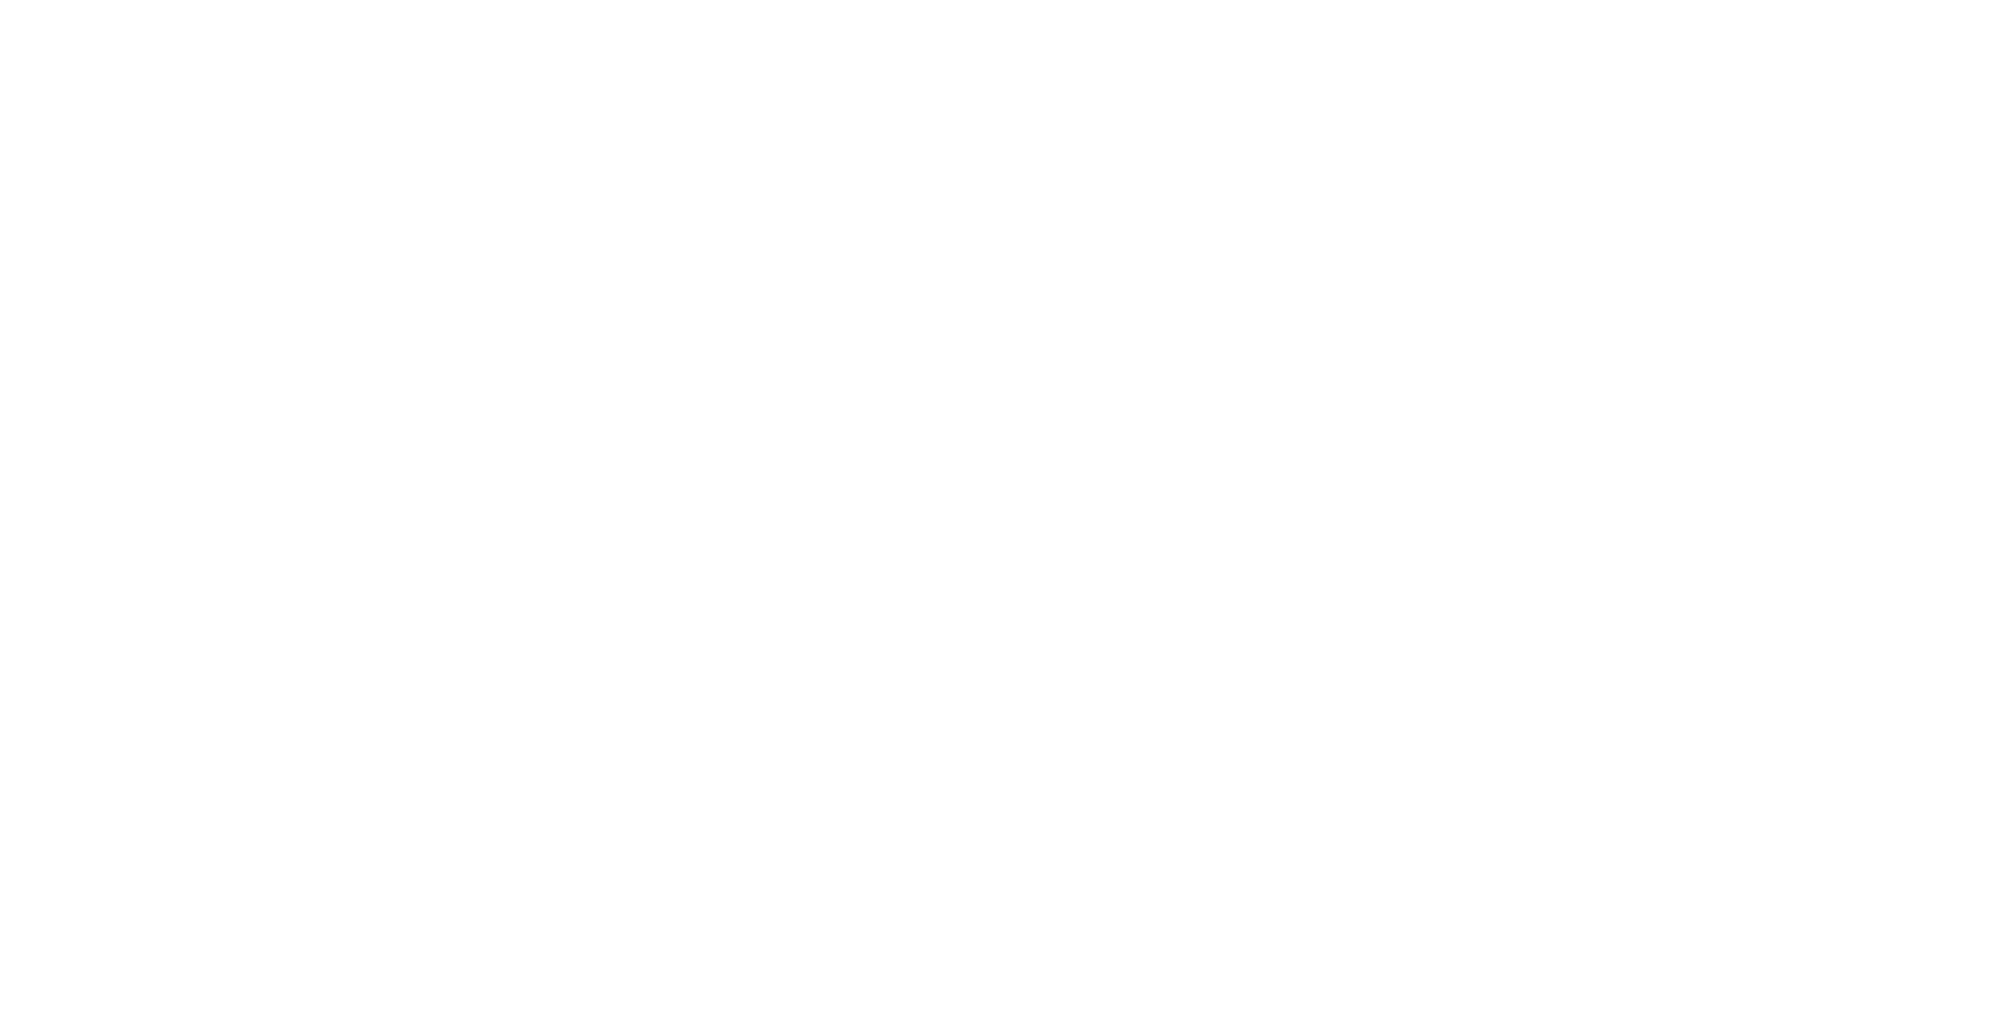 BIC x Soprano 2020